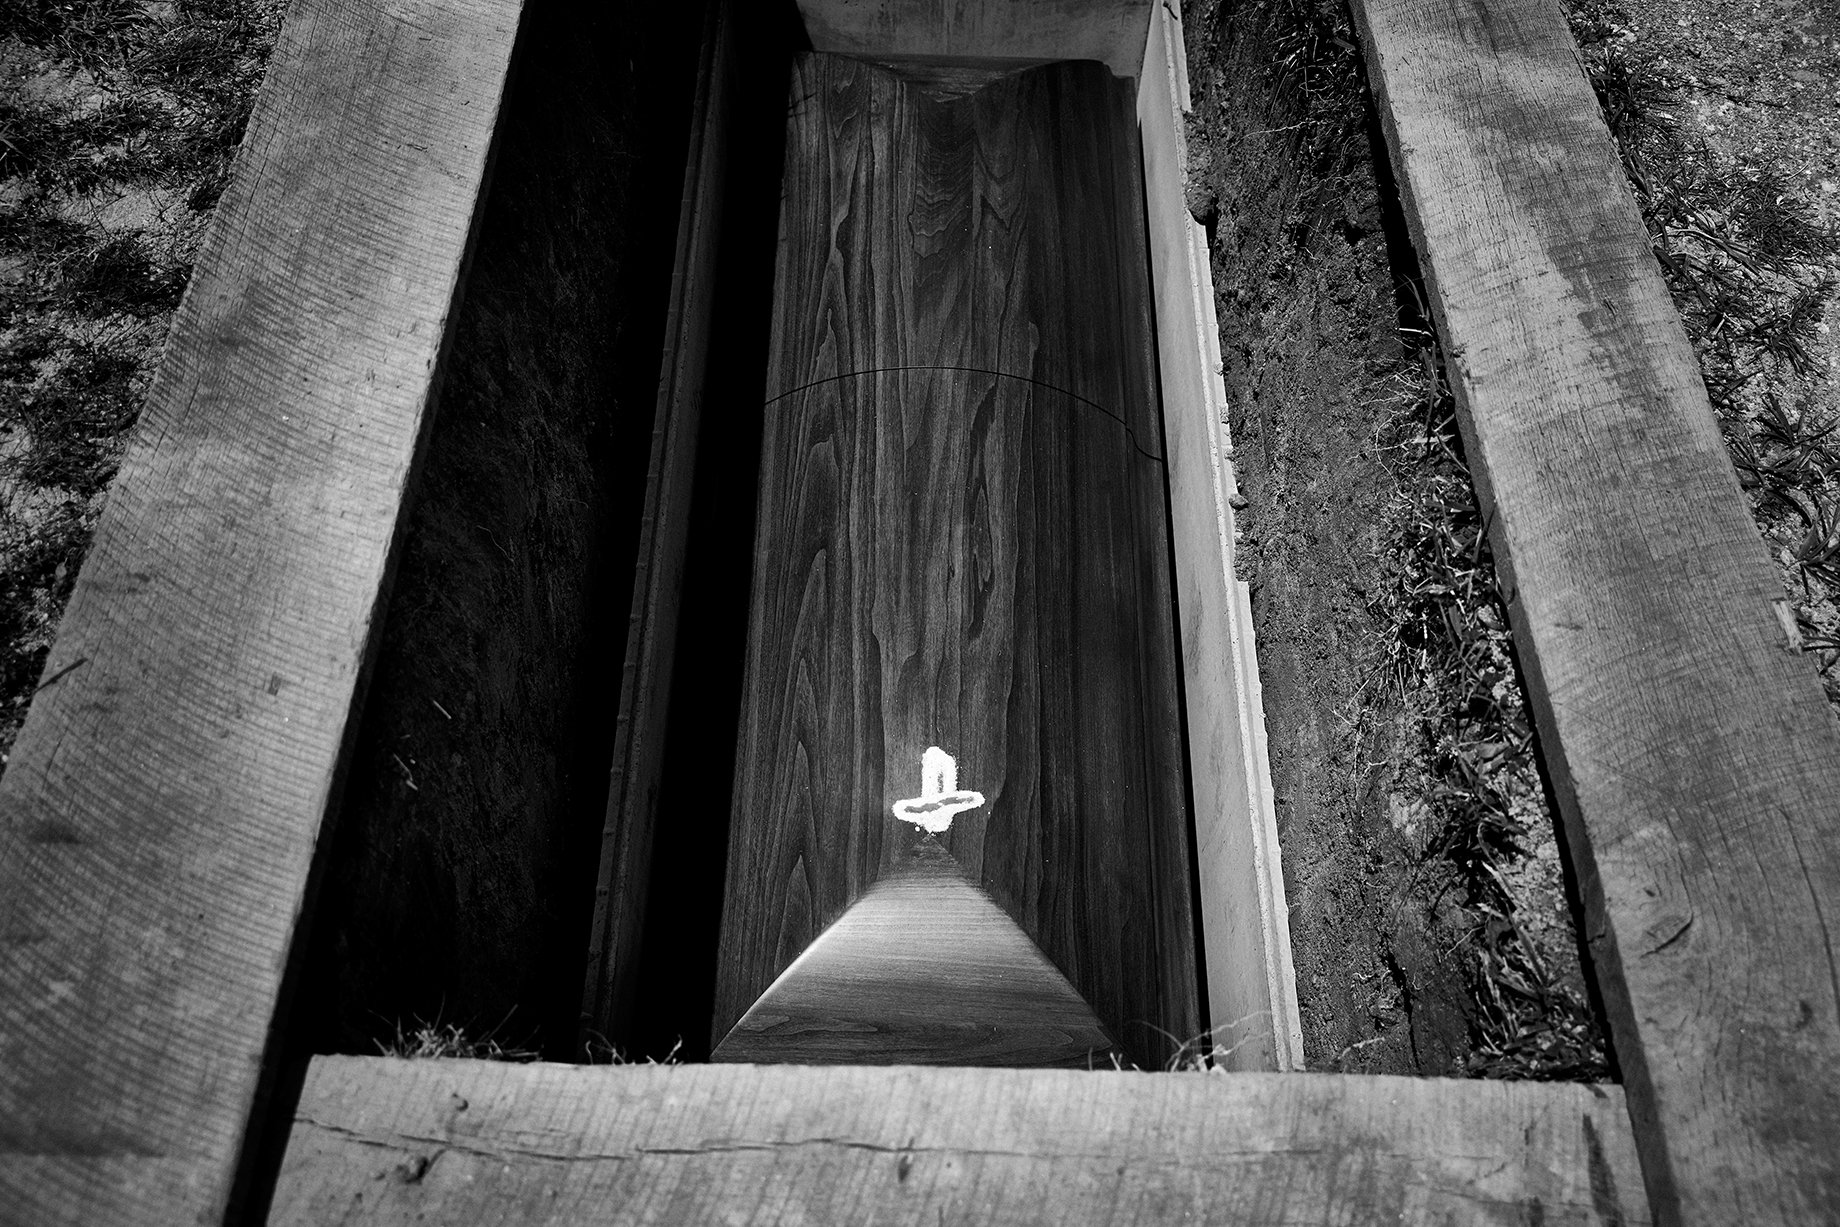 Photographer Sean Scheidt's grandfather's casket in the ground in black and white